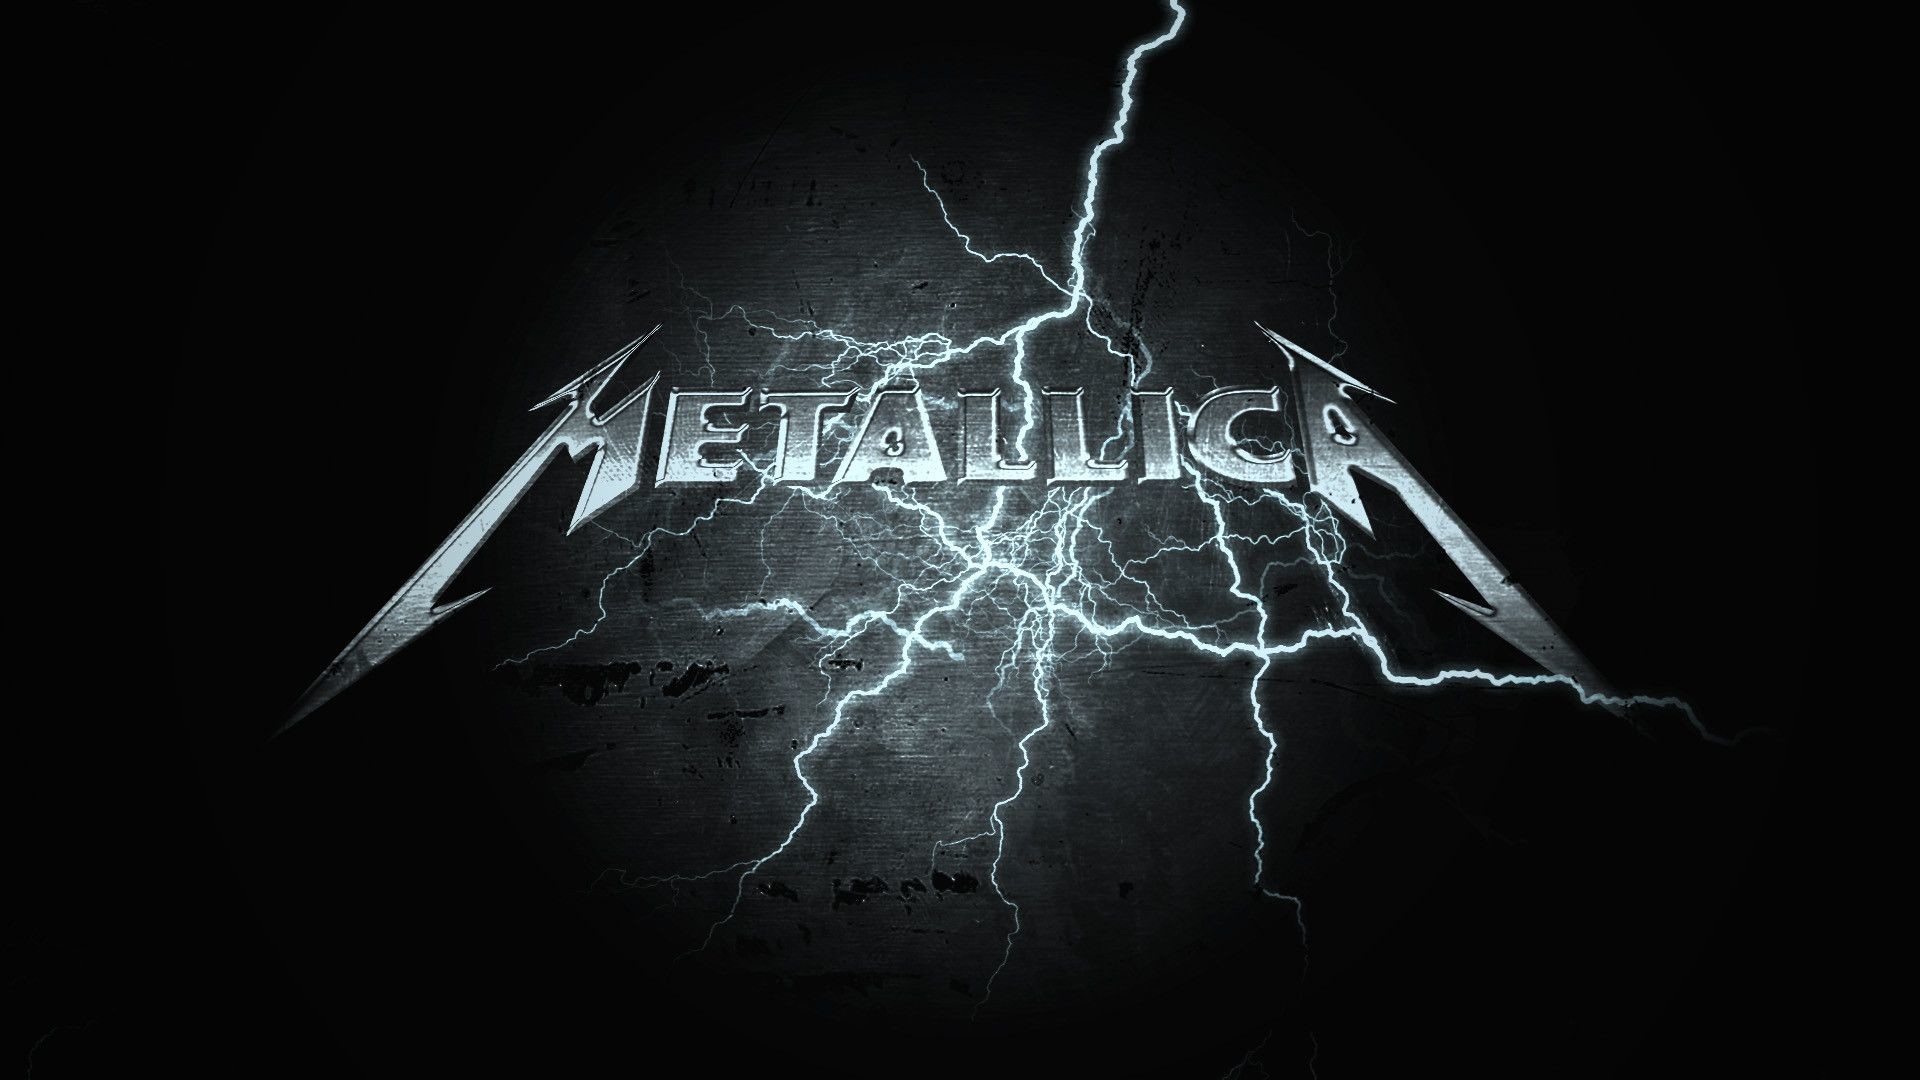 1920x1080 Metallica Ride The Lightning Wallpapers Hd For Desktop Wallpaper 1920 x  1080 px 623.08 KB ride